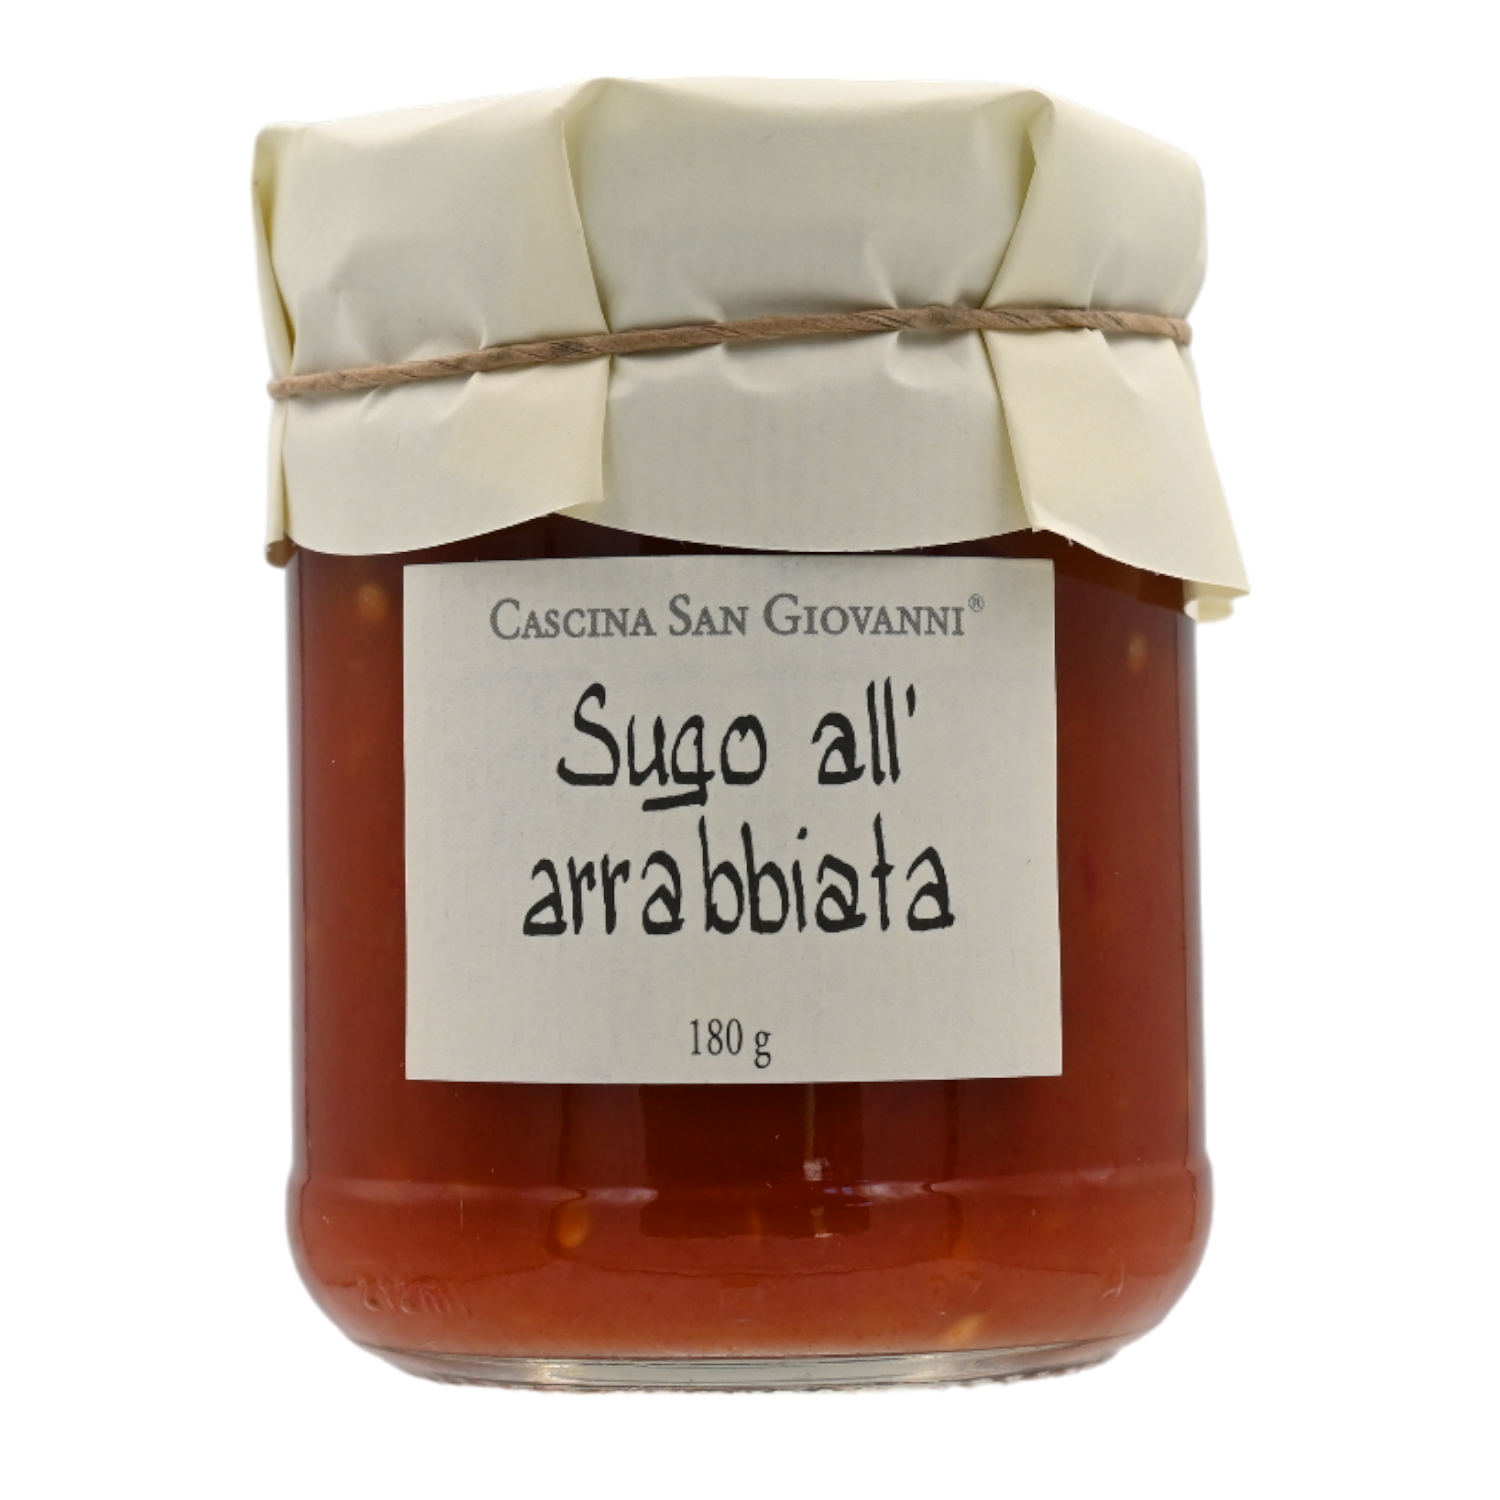 Scharfe Tomaten-Sauce - Sugo all'arrabbiata, Cascina San Giovanni, Piemont 0,18 kg